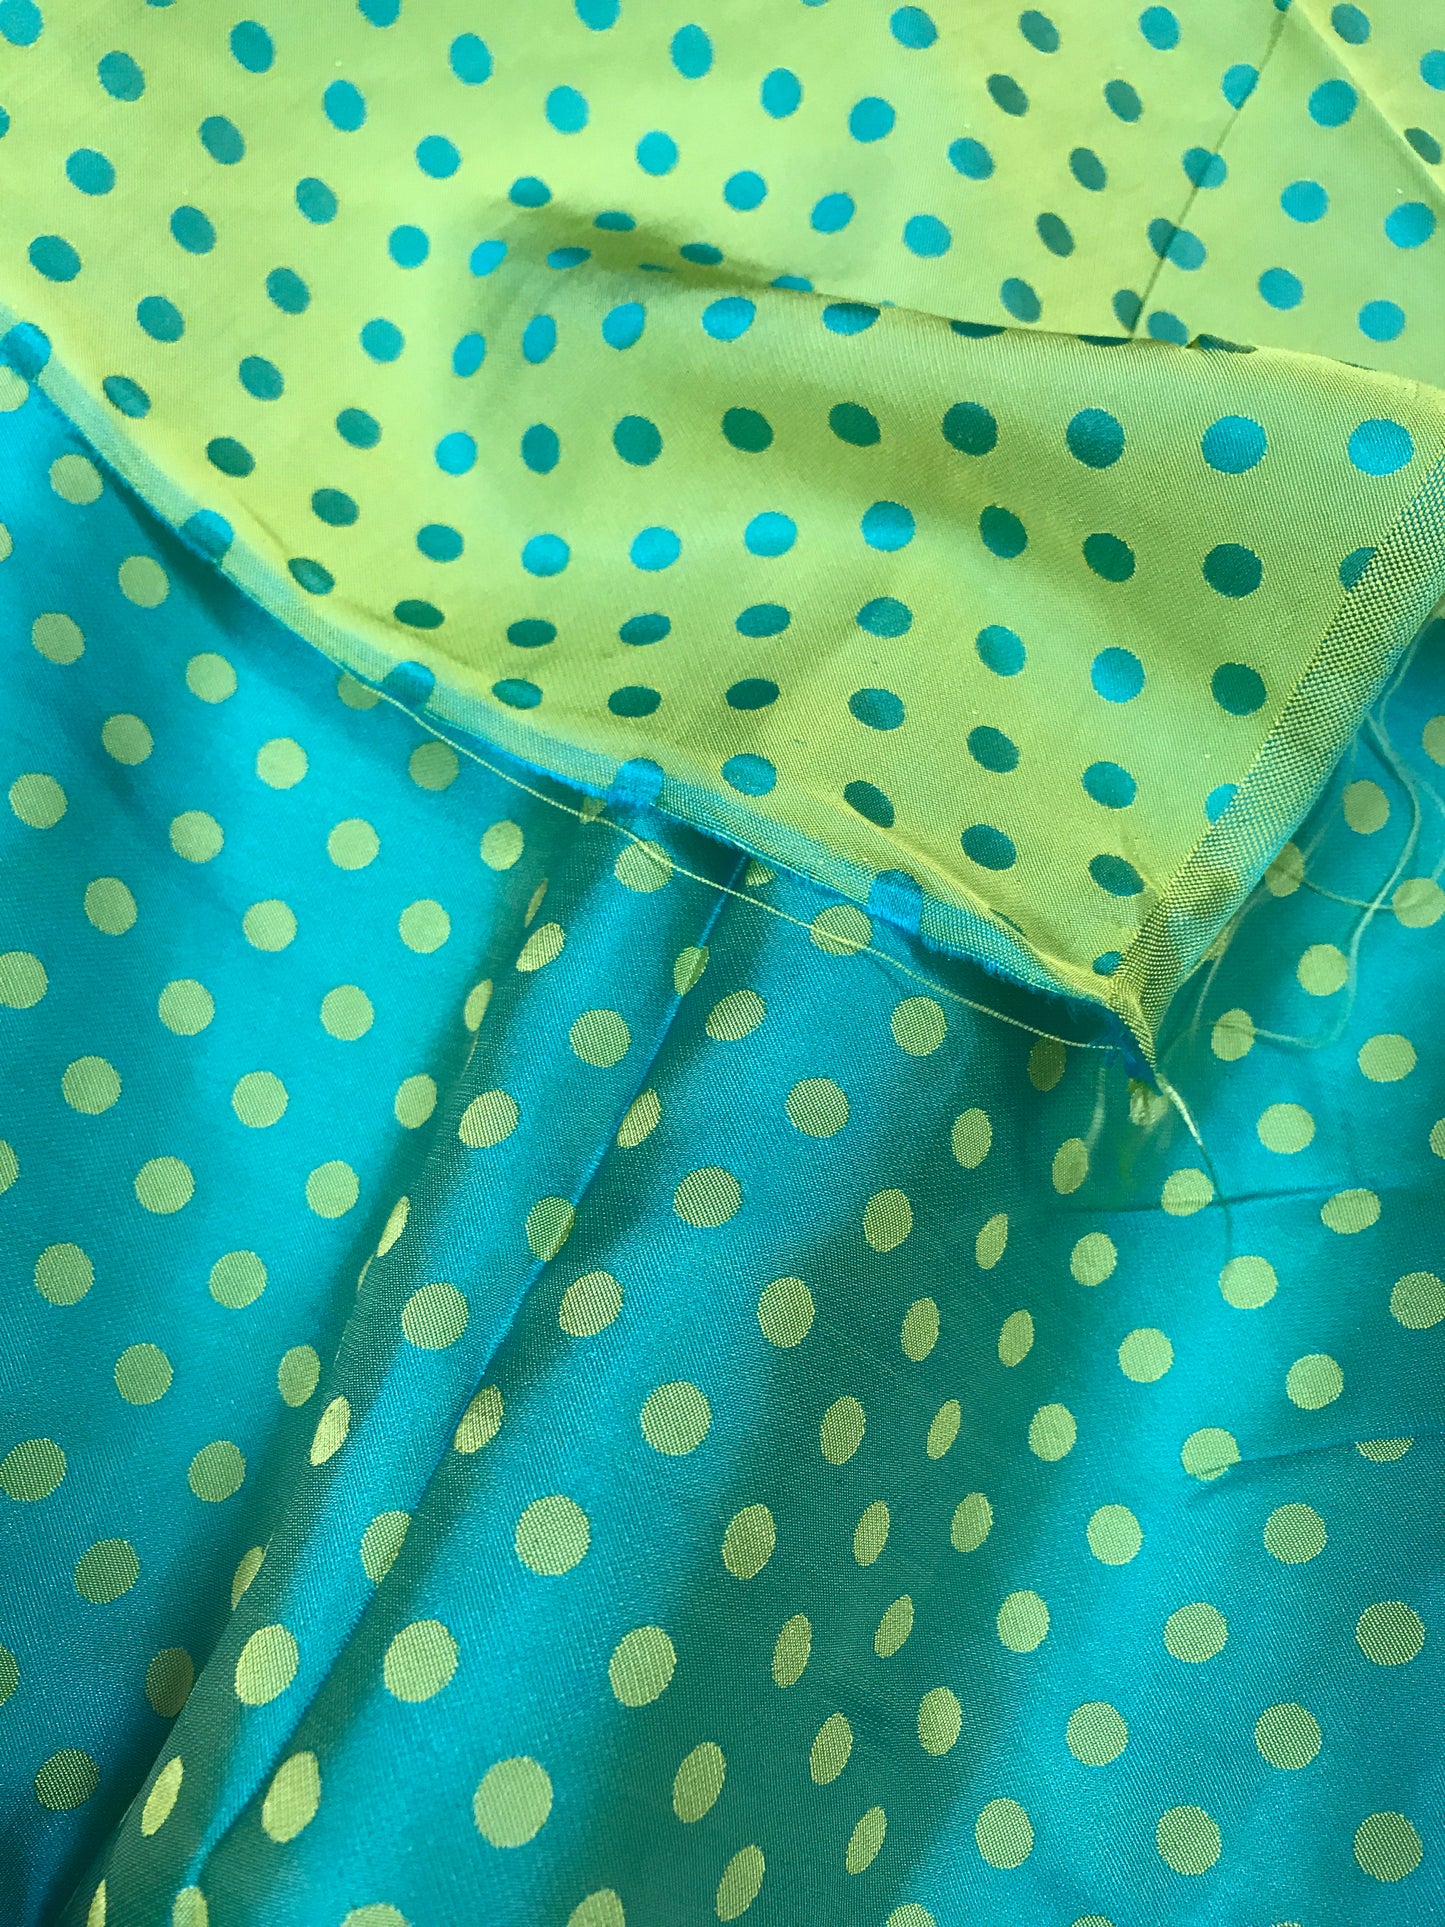 Turquoise Green dot silk - PURE MULBERRY SILK fabric by the yard - Polkadot silk -Luxury Silk - Natural silk - Handmade in VietNam- Silk with Design